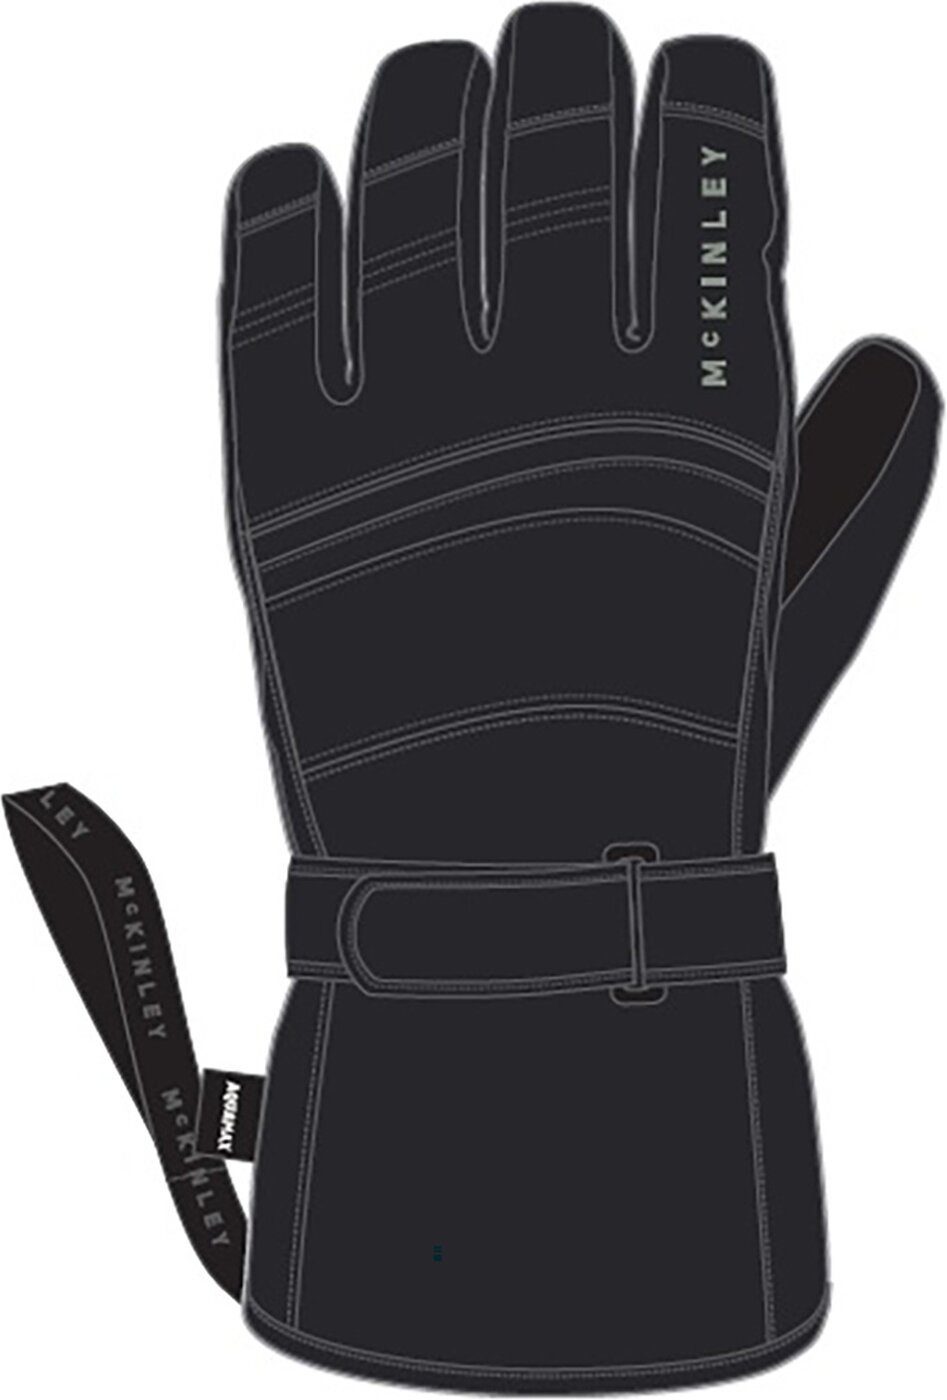 ux Skihandschuhe BLACK NIGHT/WHIT 910 Munir Ux.-Handschuh McKINLEY